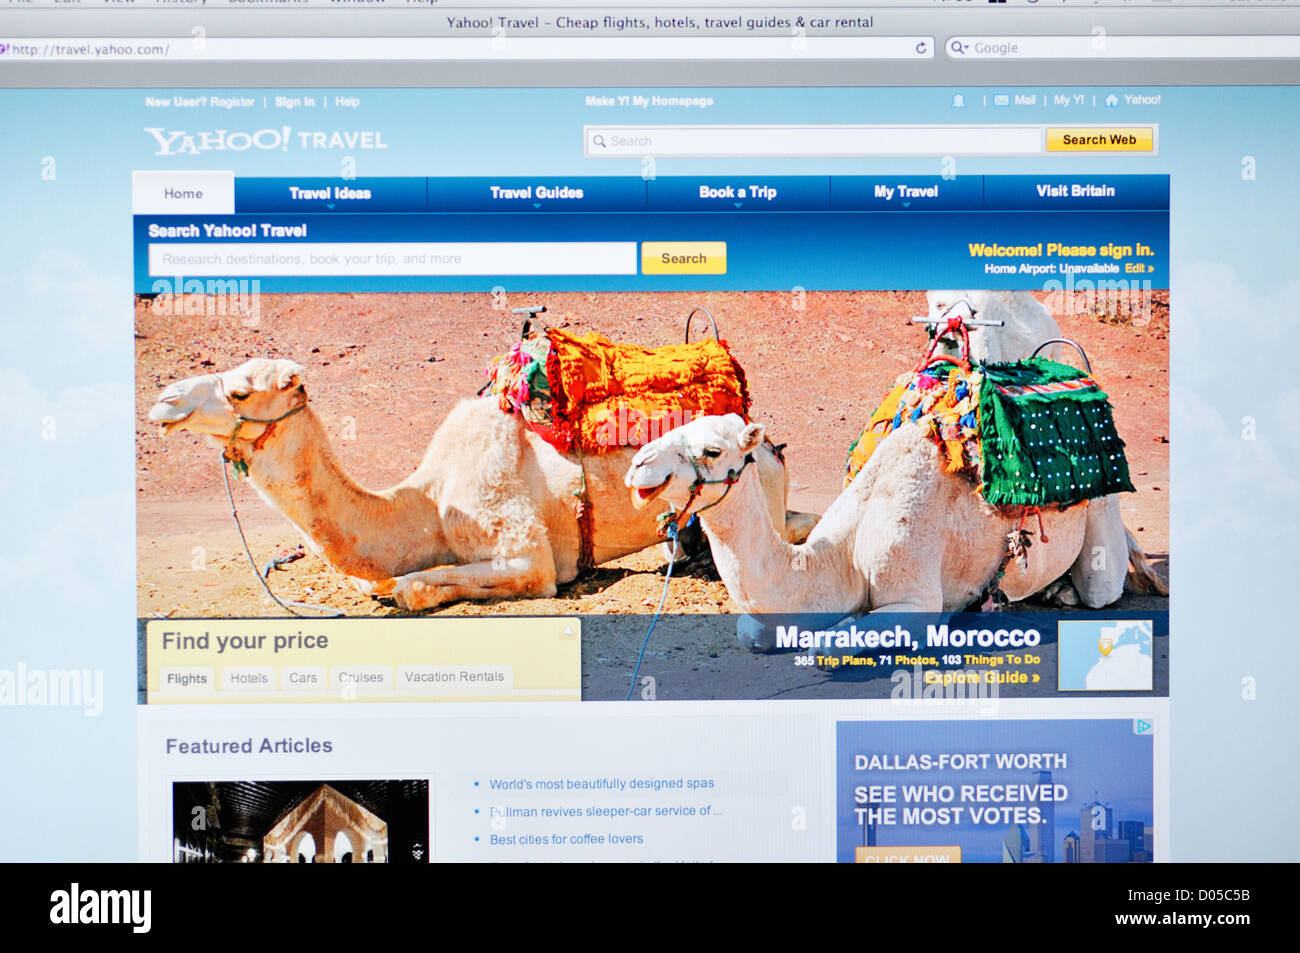 Yahoo Travel website - online travel information Stock Photo